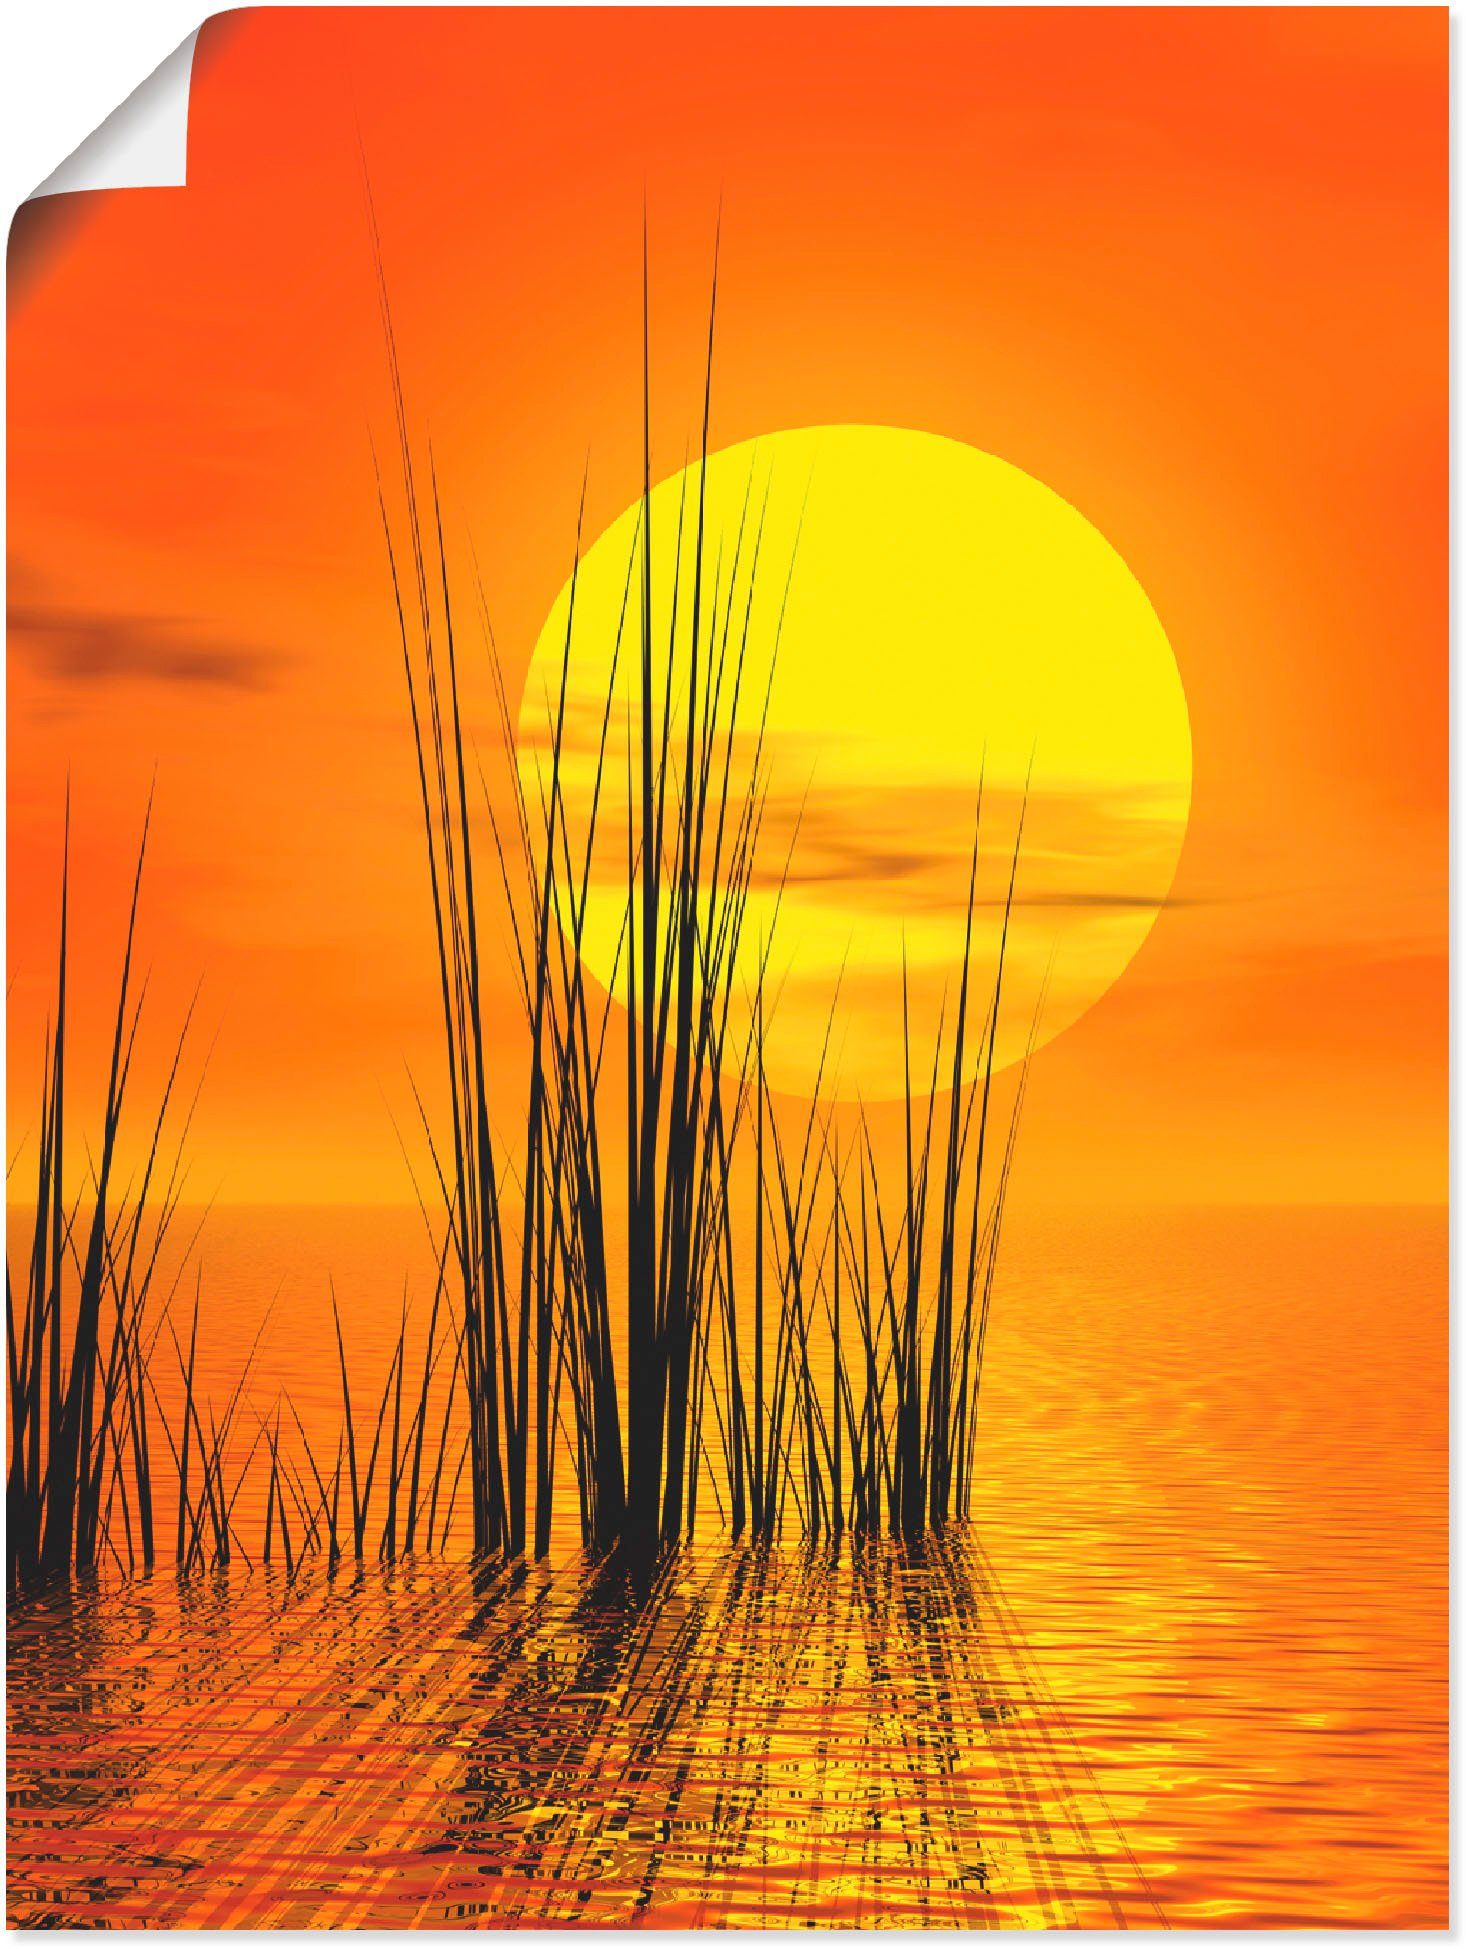 Artland Wandbild Sonnenuntergang mit Schilf, Sonnenaufgang & -untergang (1 St), als Leinwandbild, Wandaufkleber oder Poster in versch. Größen